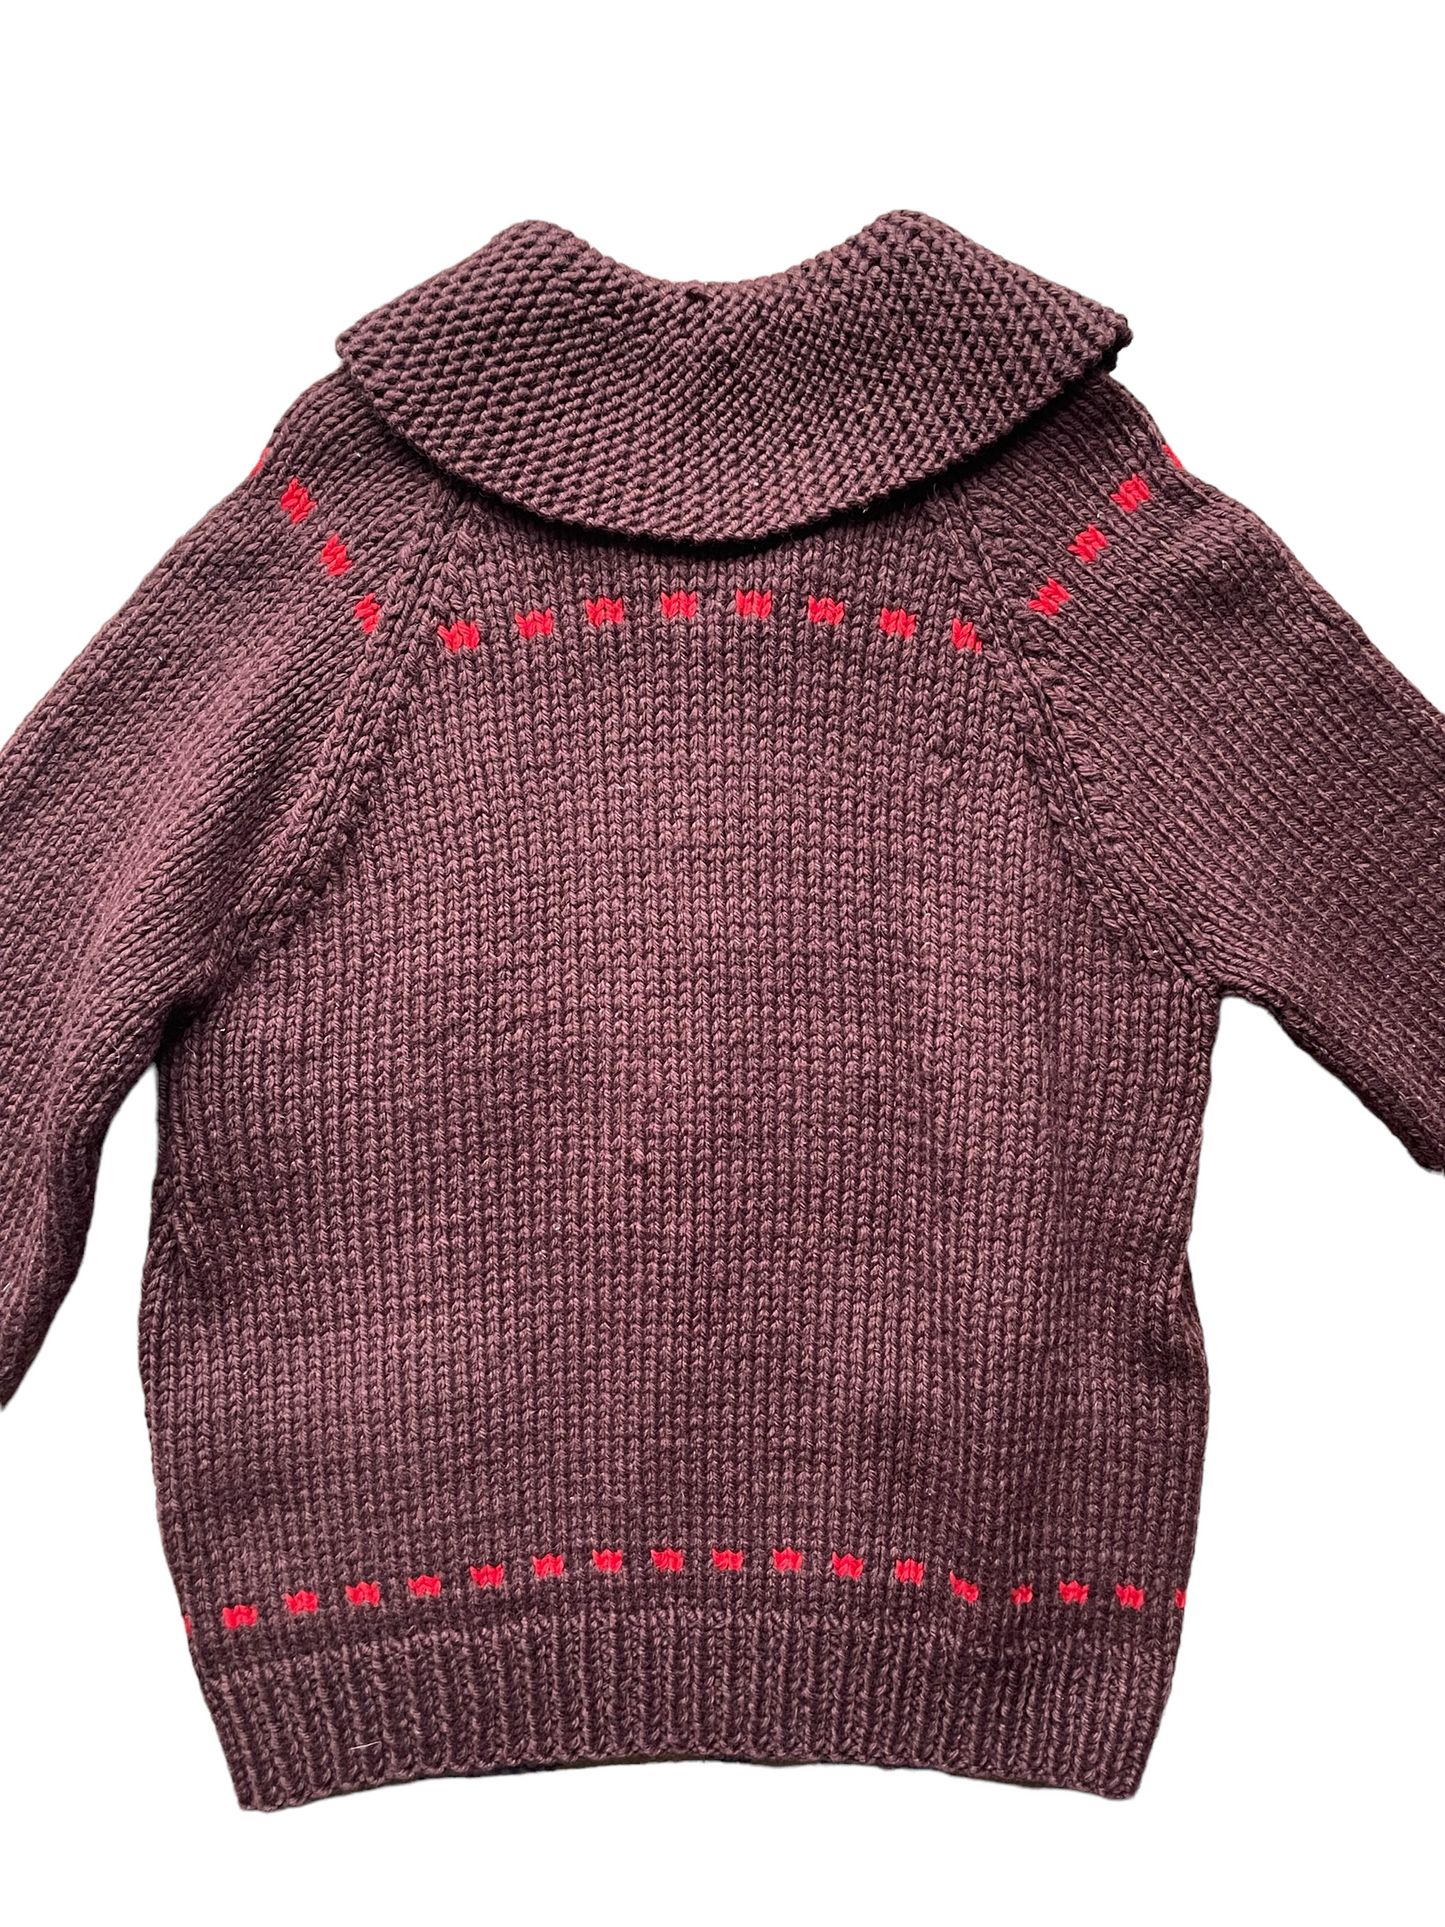 Vintage Brown Cowichan Style Cardigan Sweater | Barn Owl Vintage | Seattle Vintage Clothing